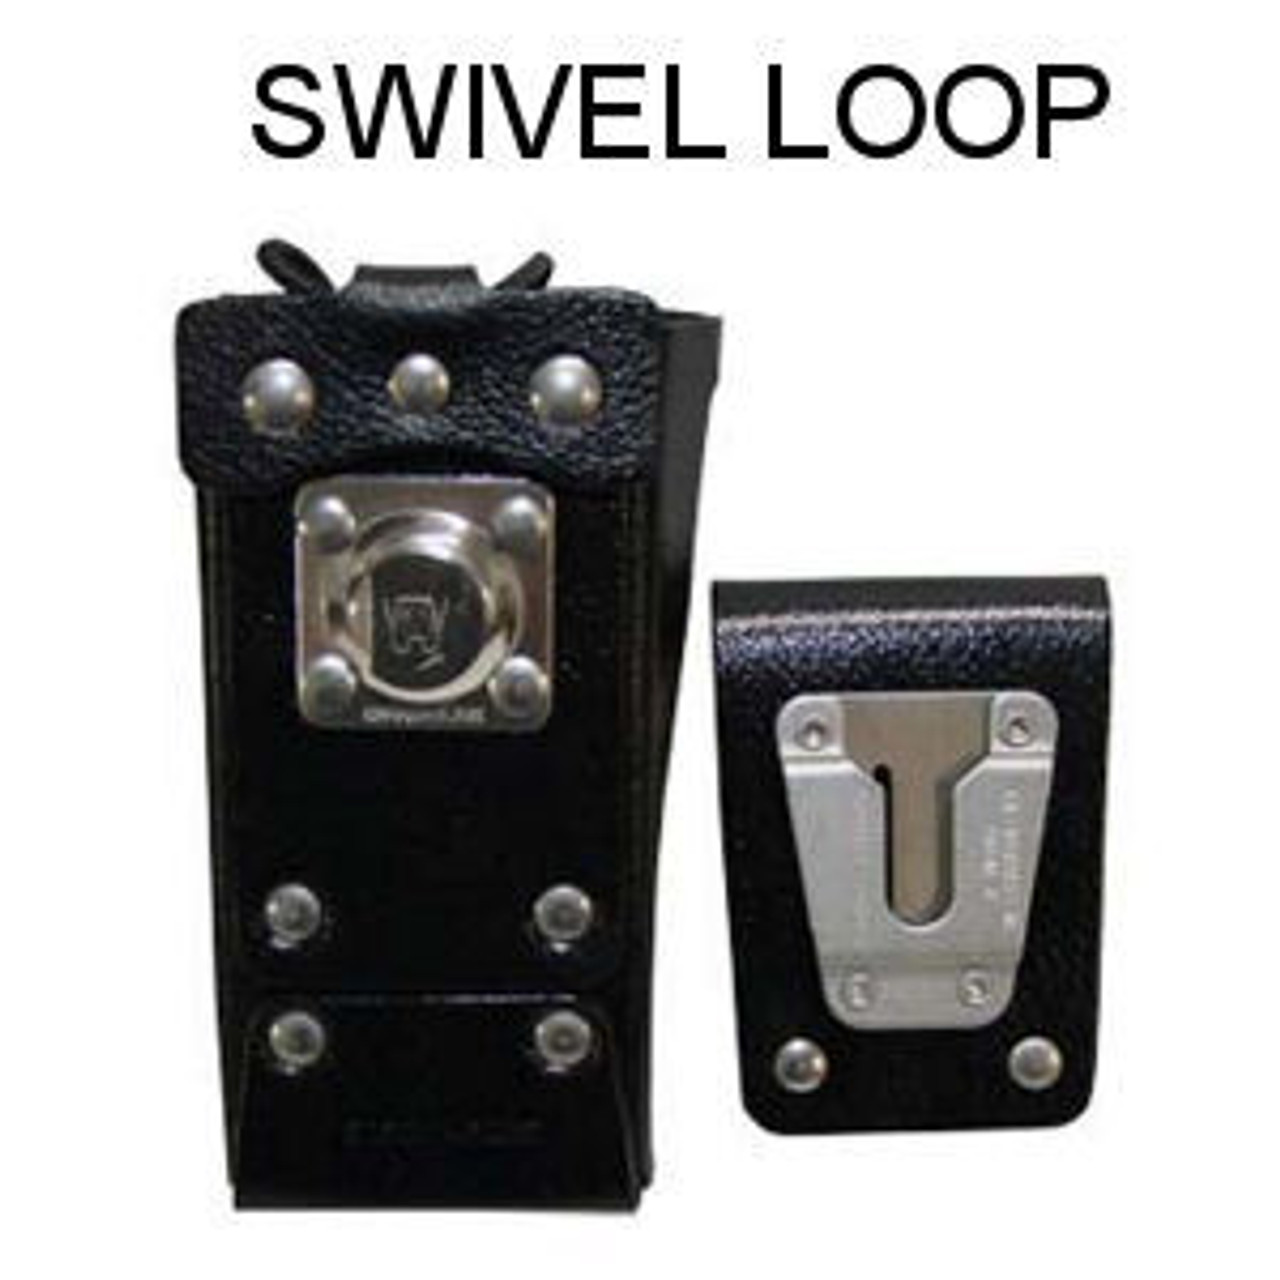 M/A-Com P7350 Custom Radio Case With Swivel Loop